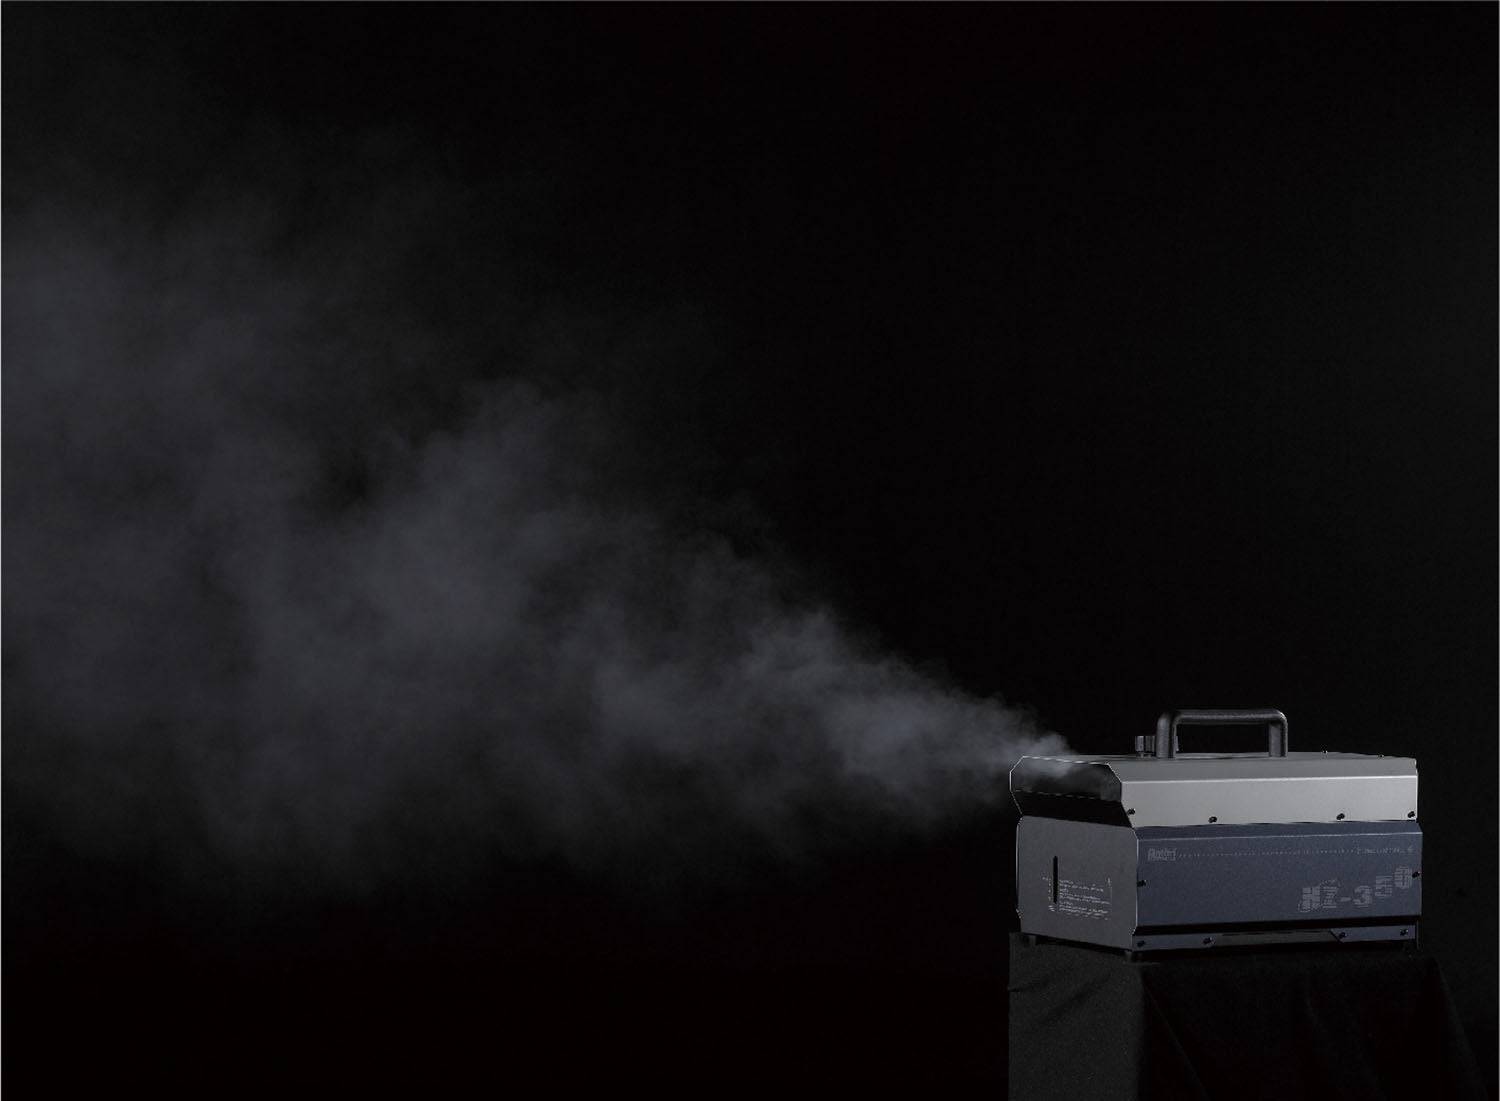 Antari HZ-350 Oil Based Haze Machine with Wireless Remote - Hollywood DJ